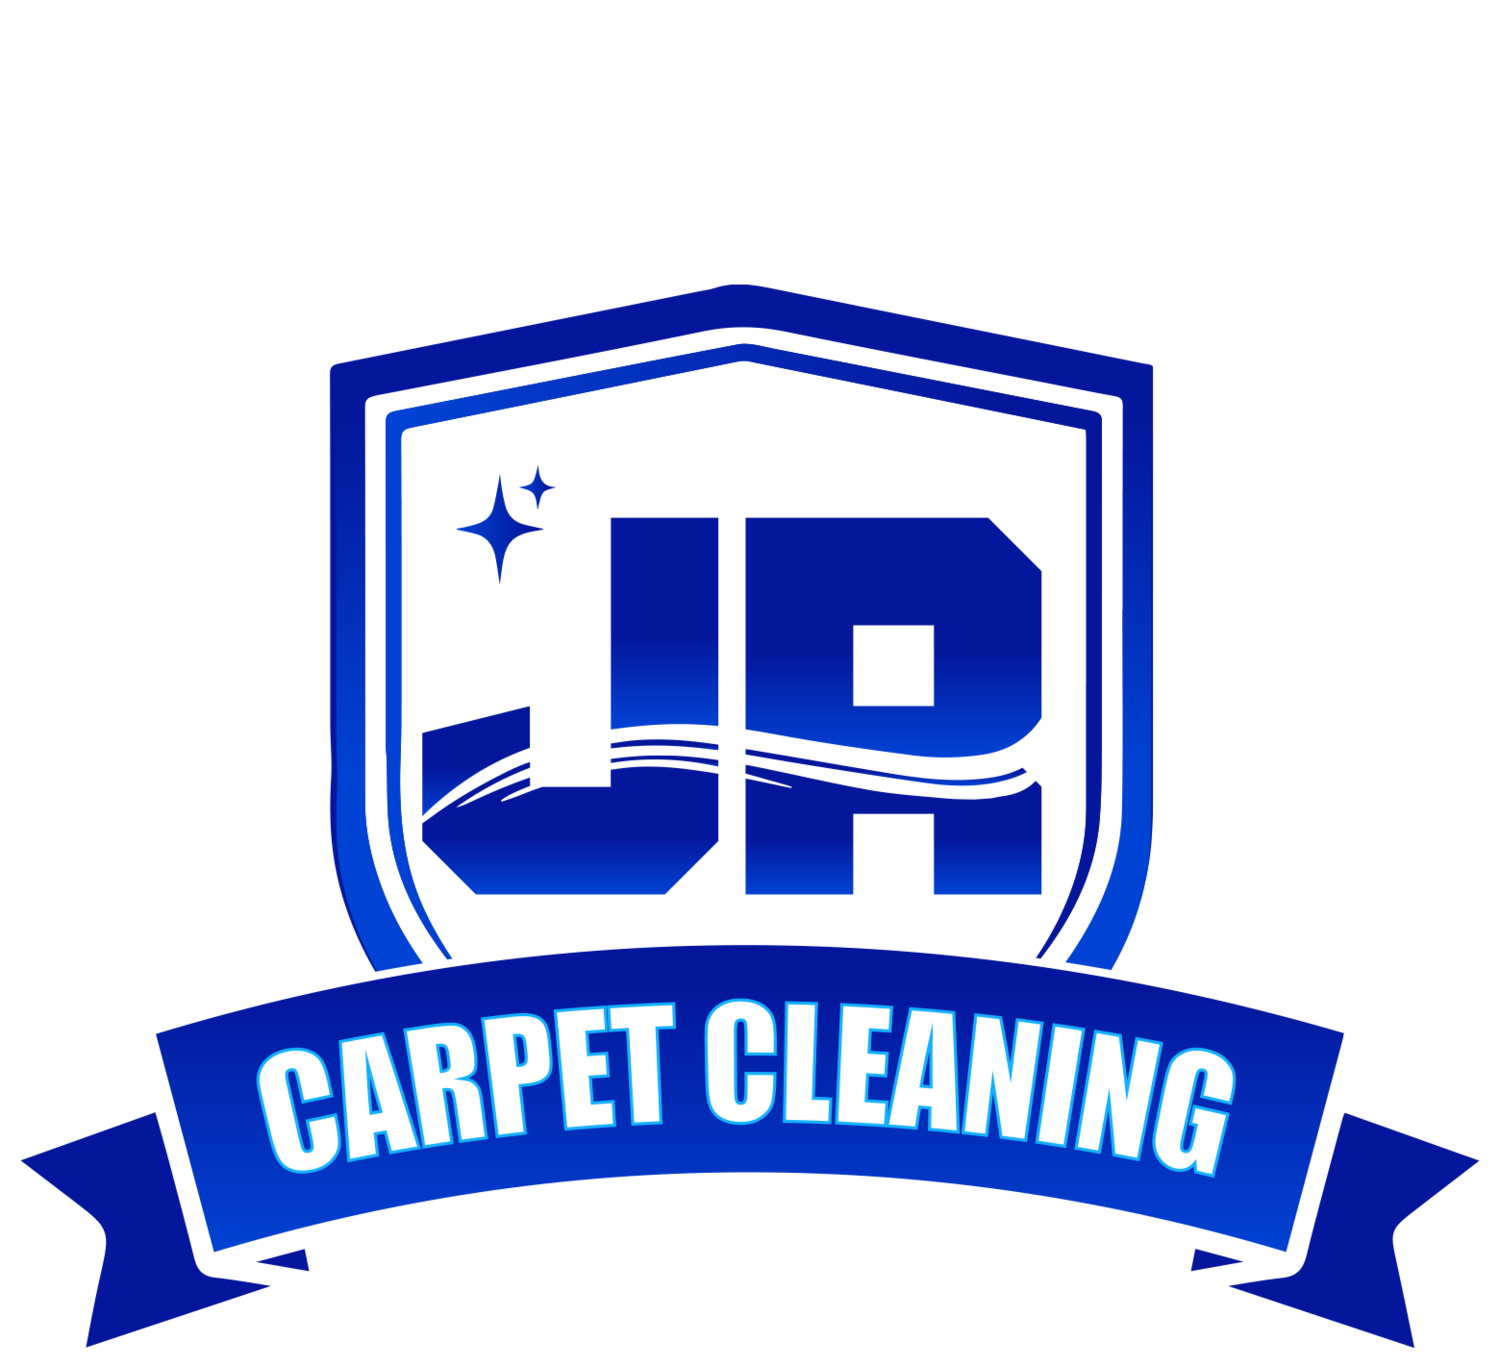 JR Carpet Cleaning Services